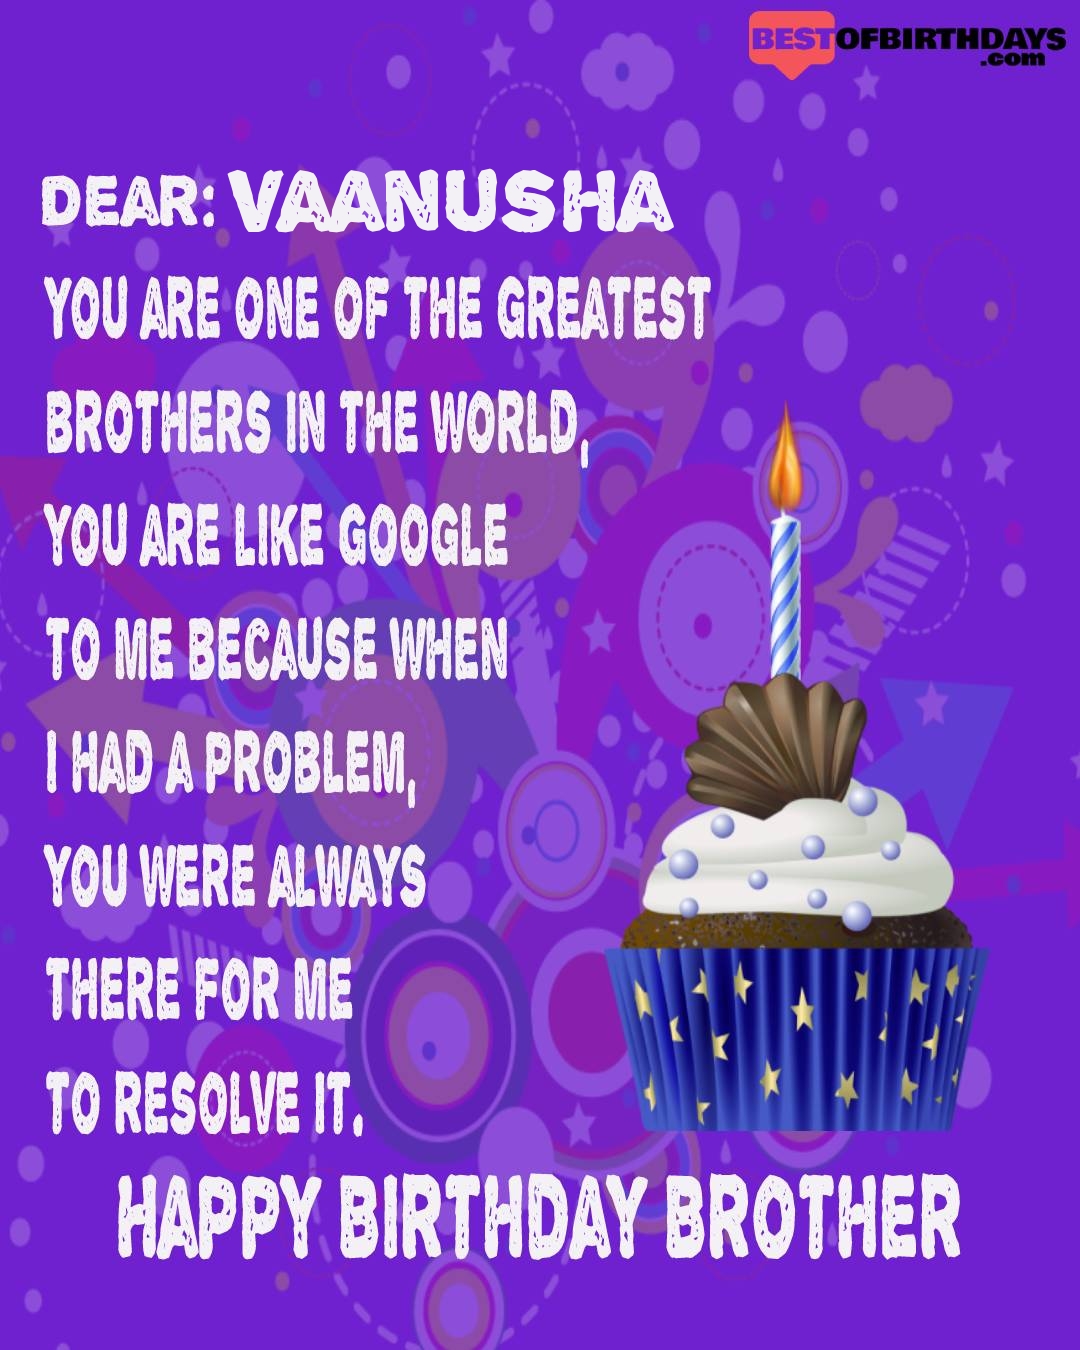 Happy birthday vaanusha bhai brother bro